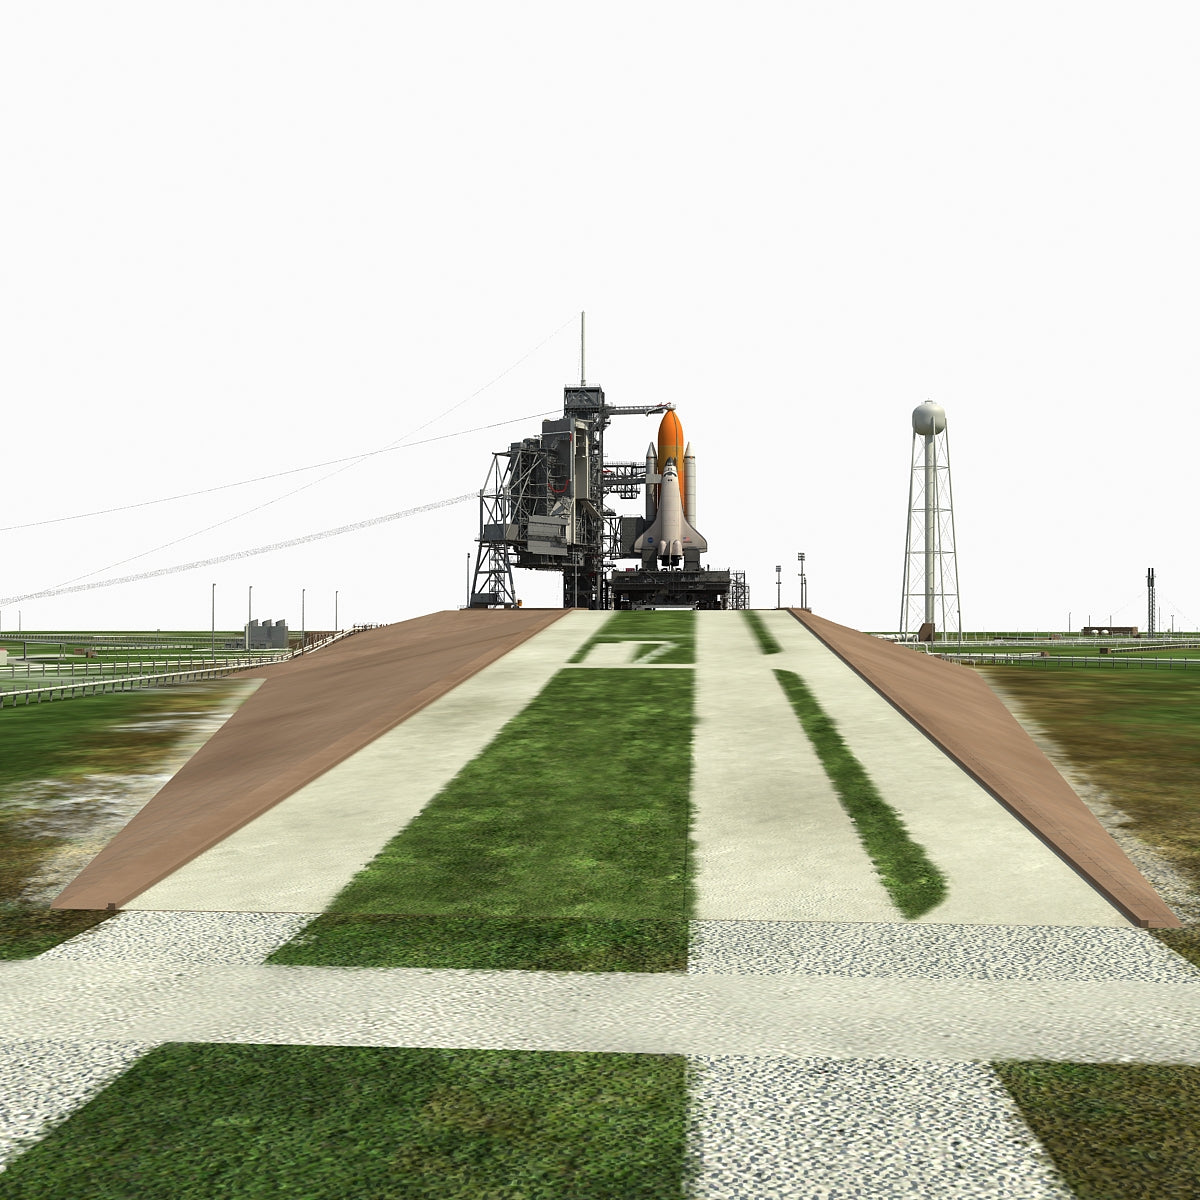 NASA Launch Complex 39-A